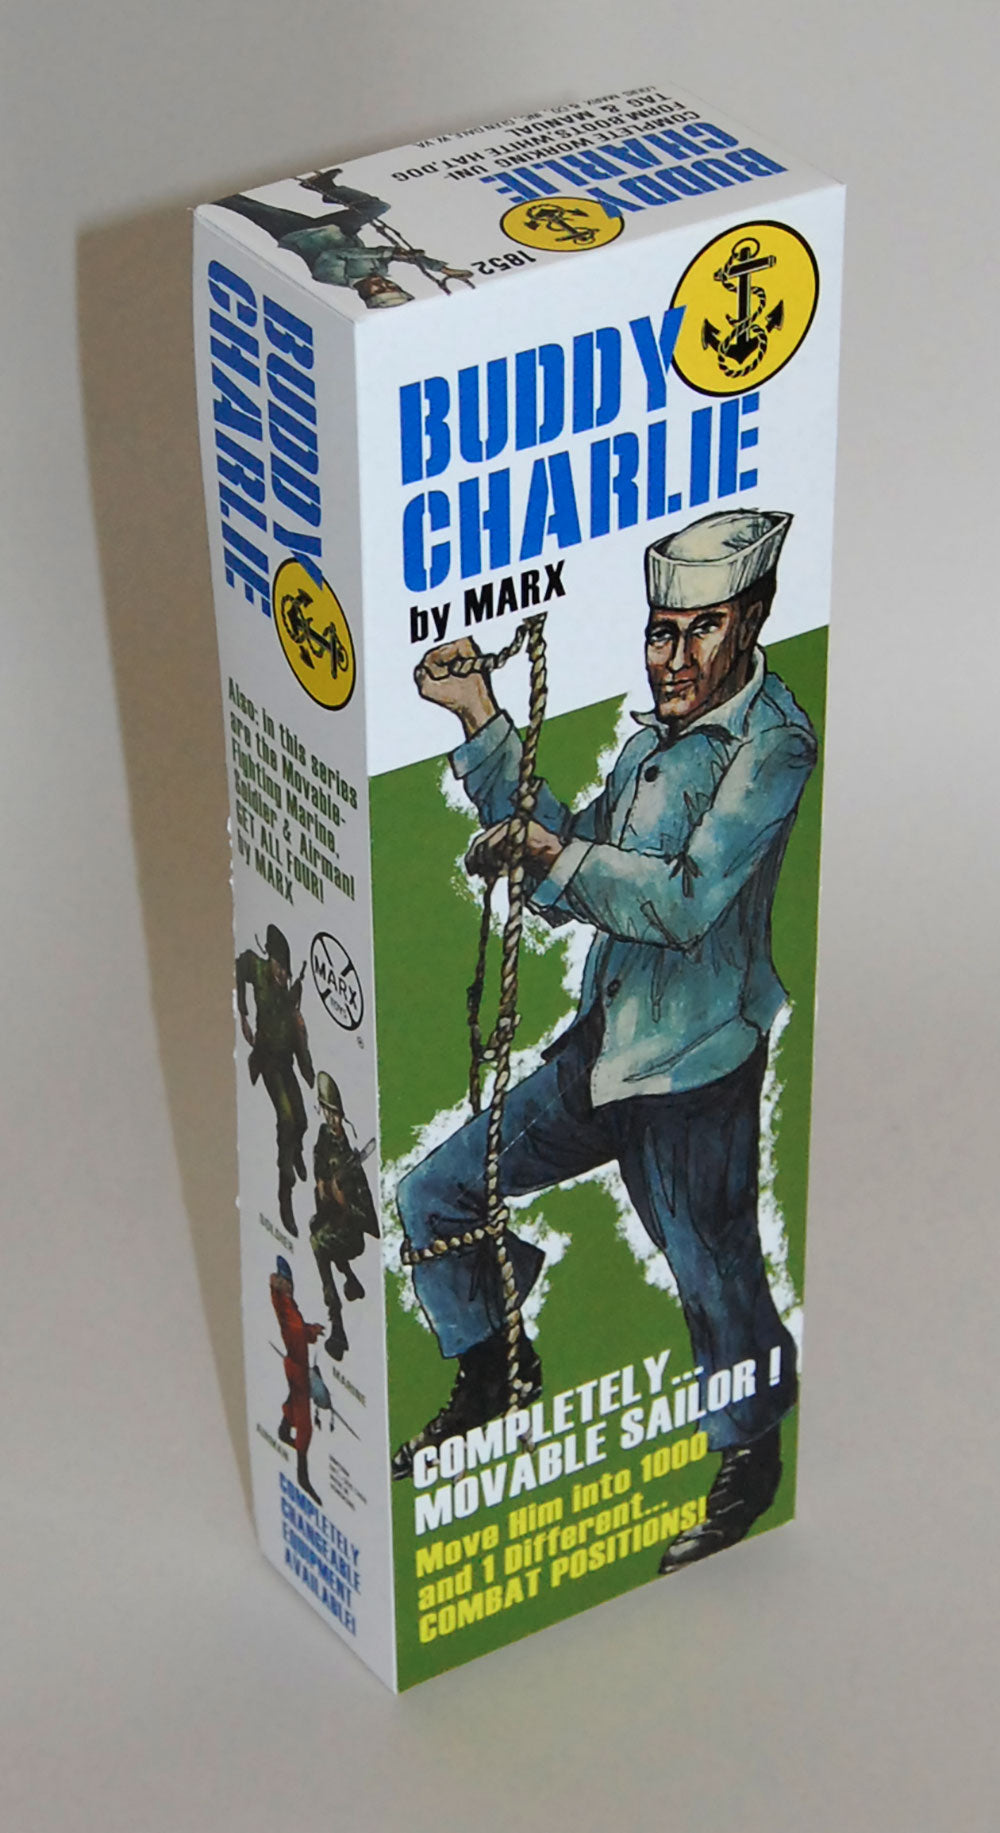 Buddy Charlie - By Marx - Sailor Reproduction Box (and Manual)